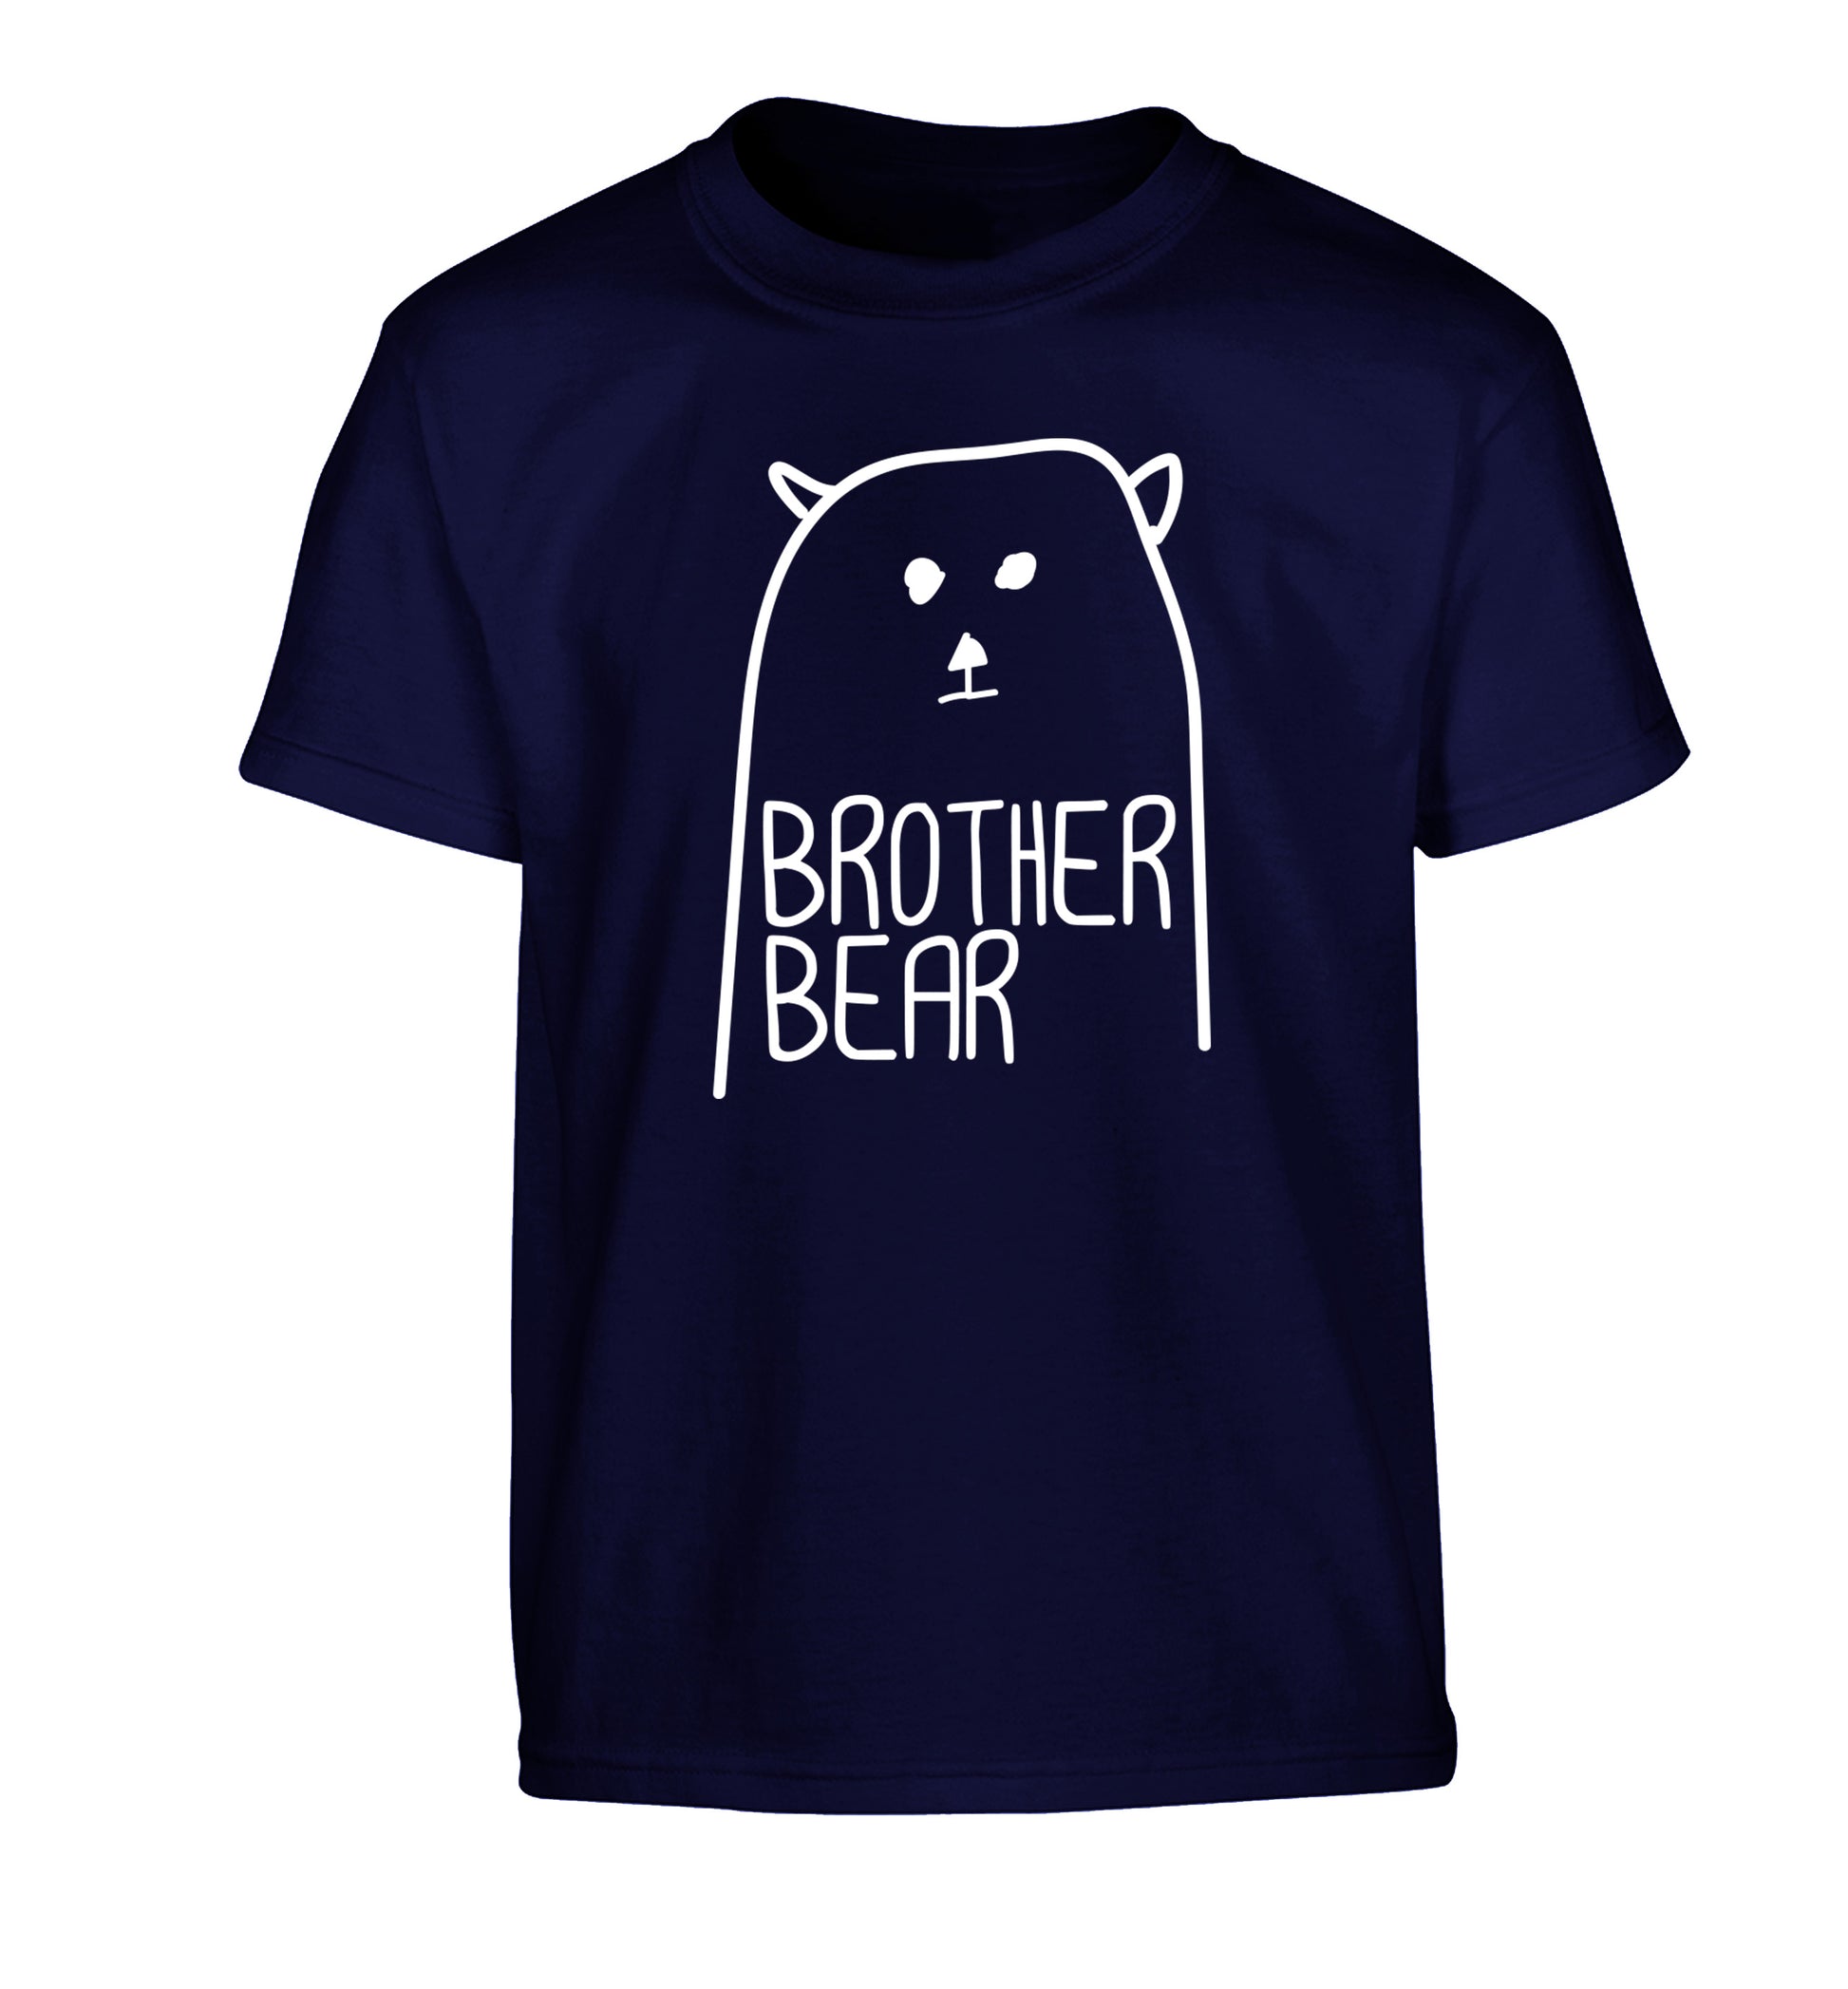 Brother bear Children's navy Tshirt 12-13 Years